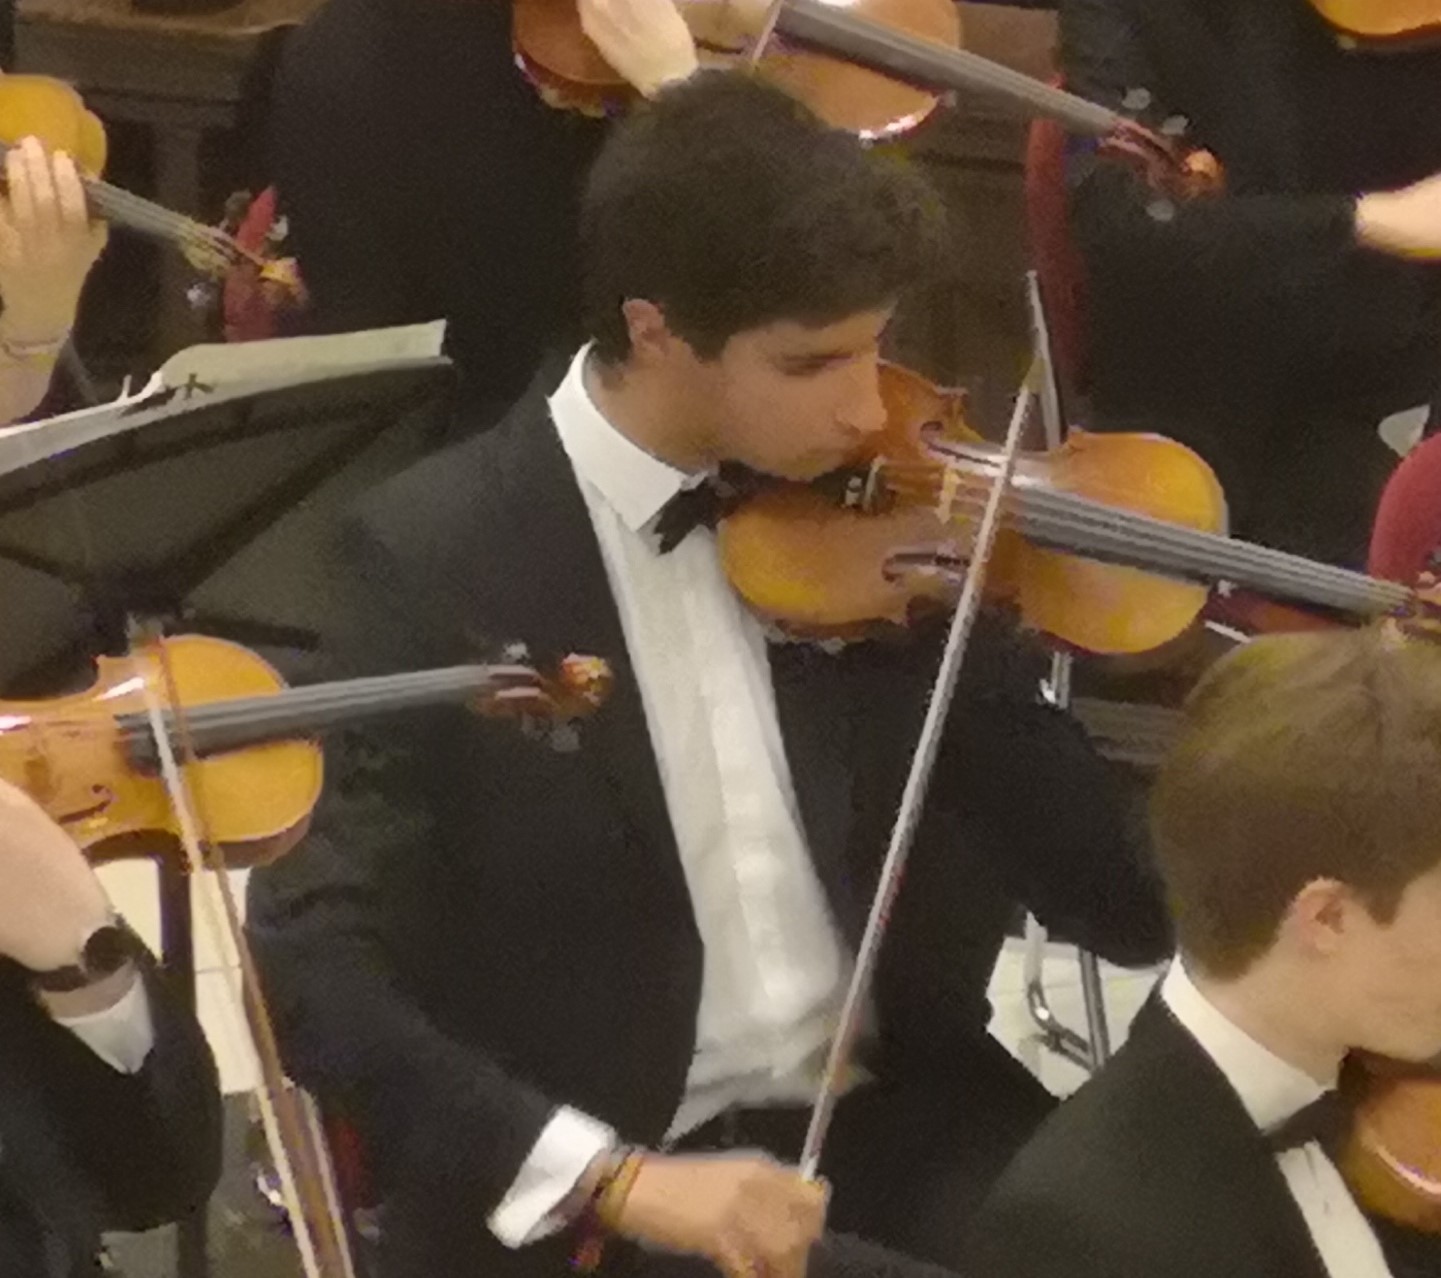 Ignacio playing the violin in a concert